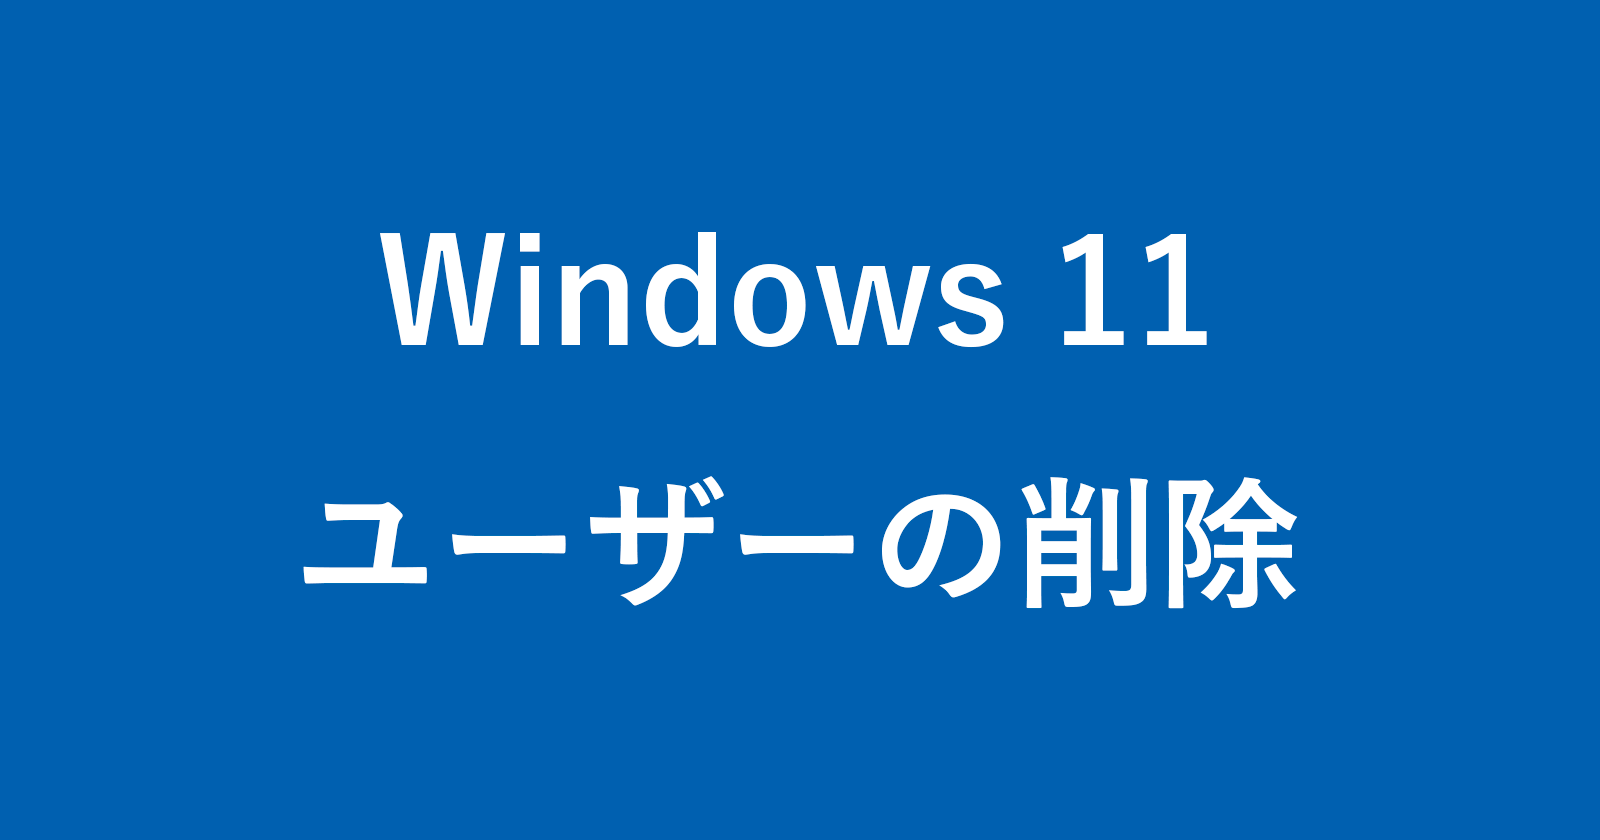 windows 11 delete user account